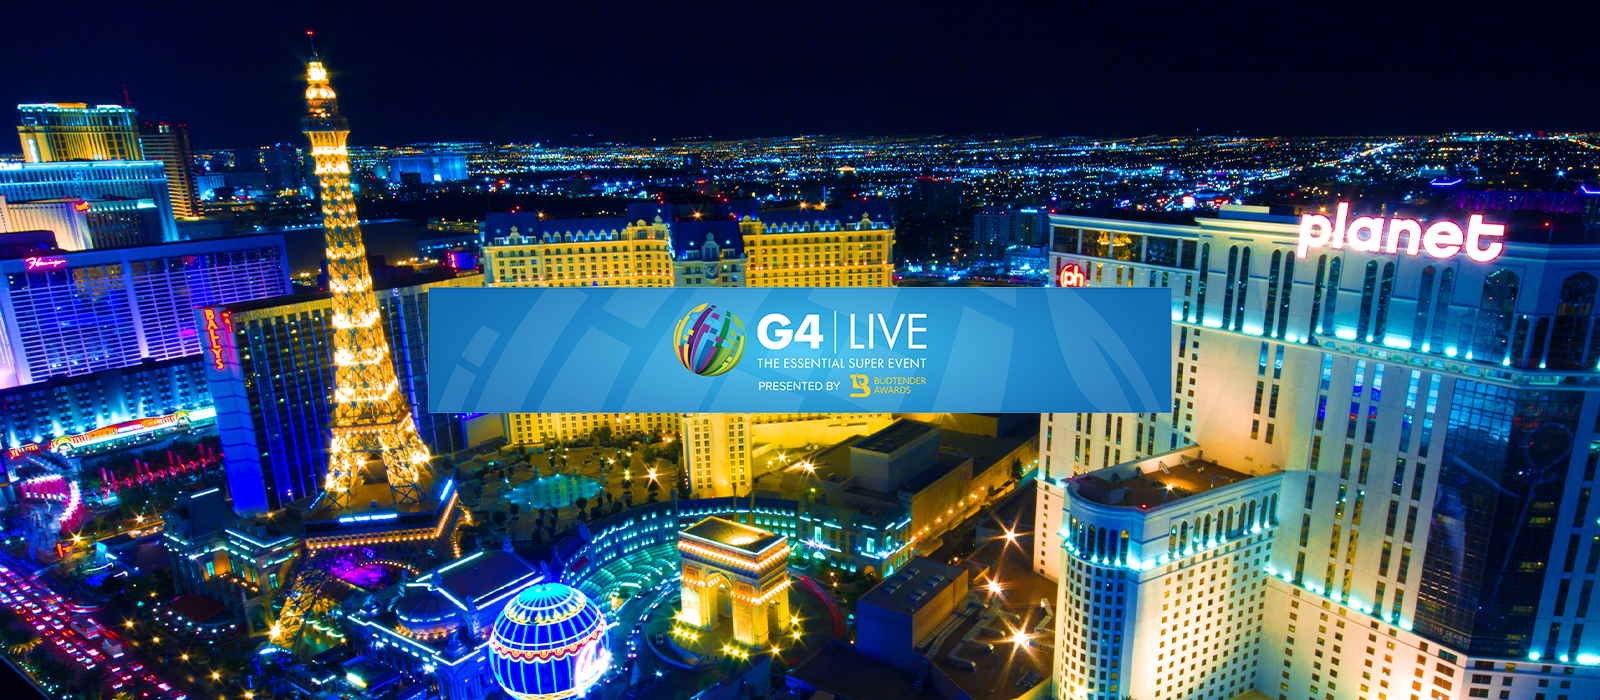 g4 live banner